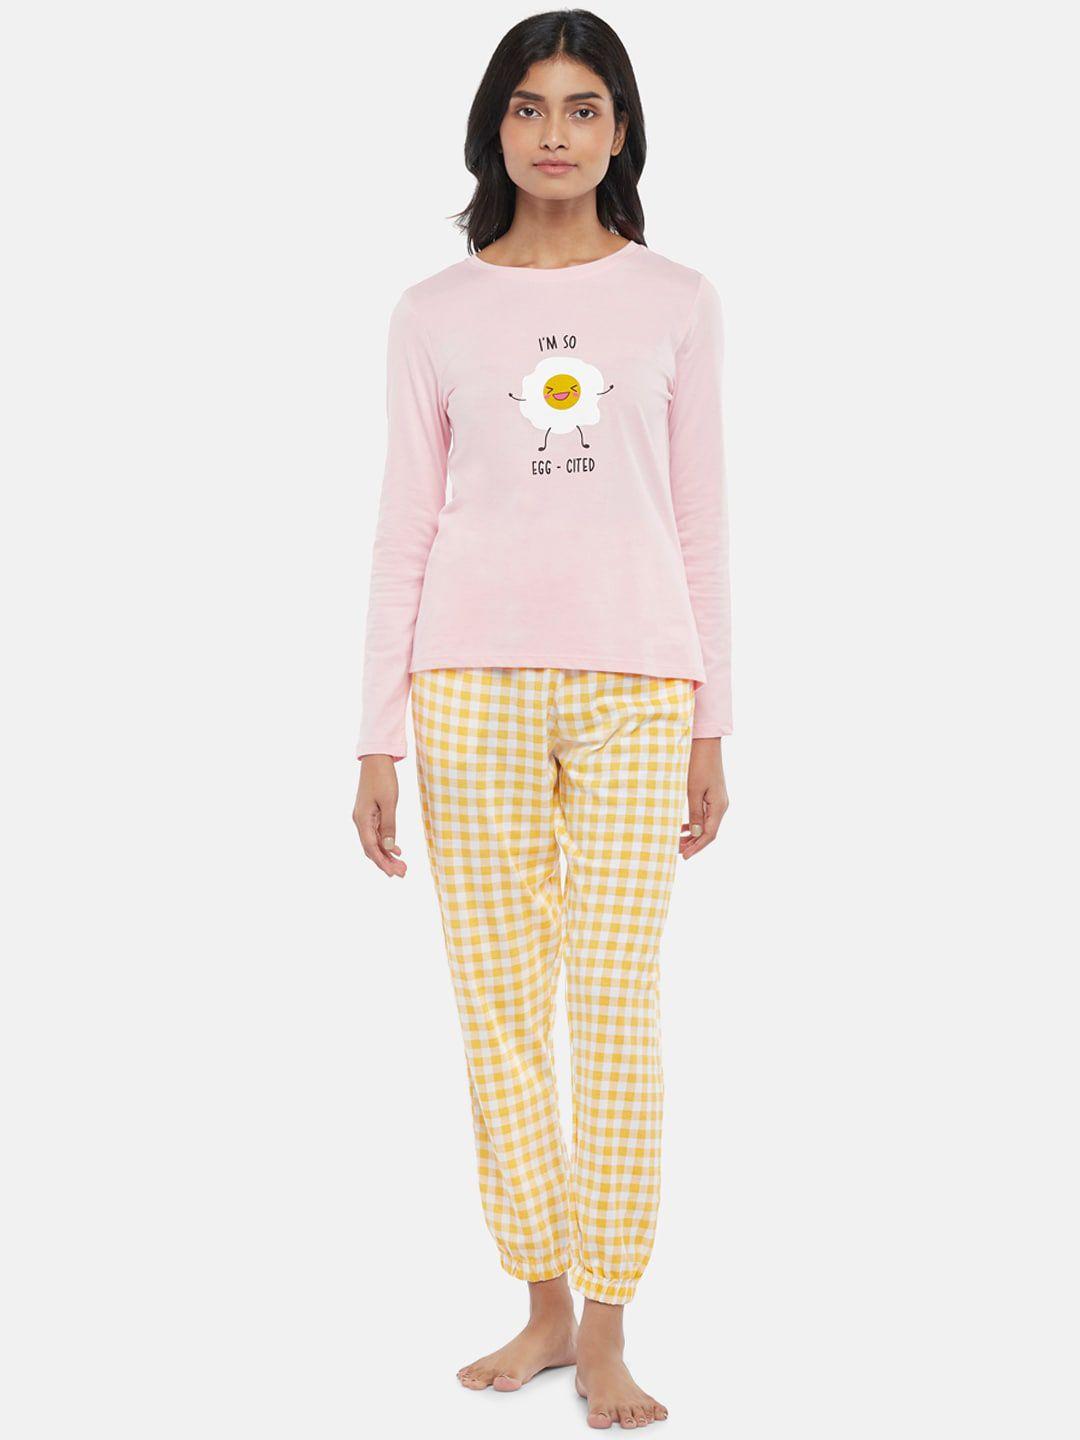 dreamz by pantaloons women pink & yellow printed night suit